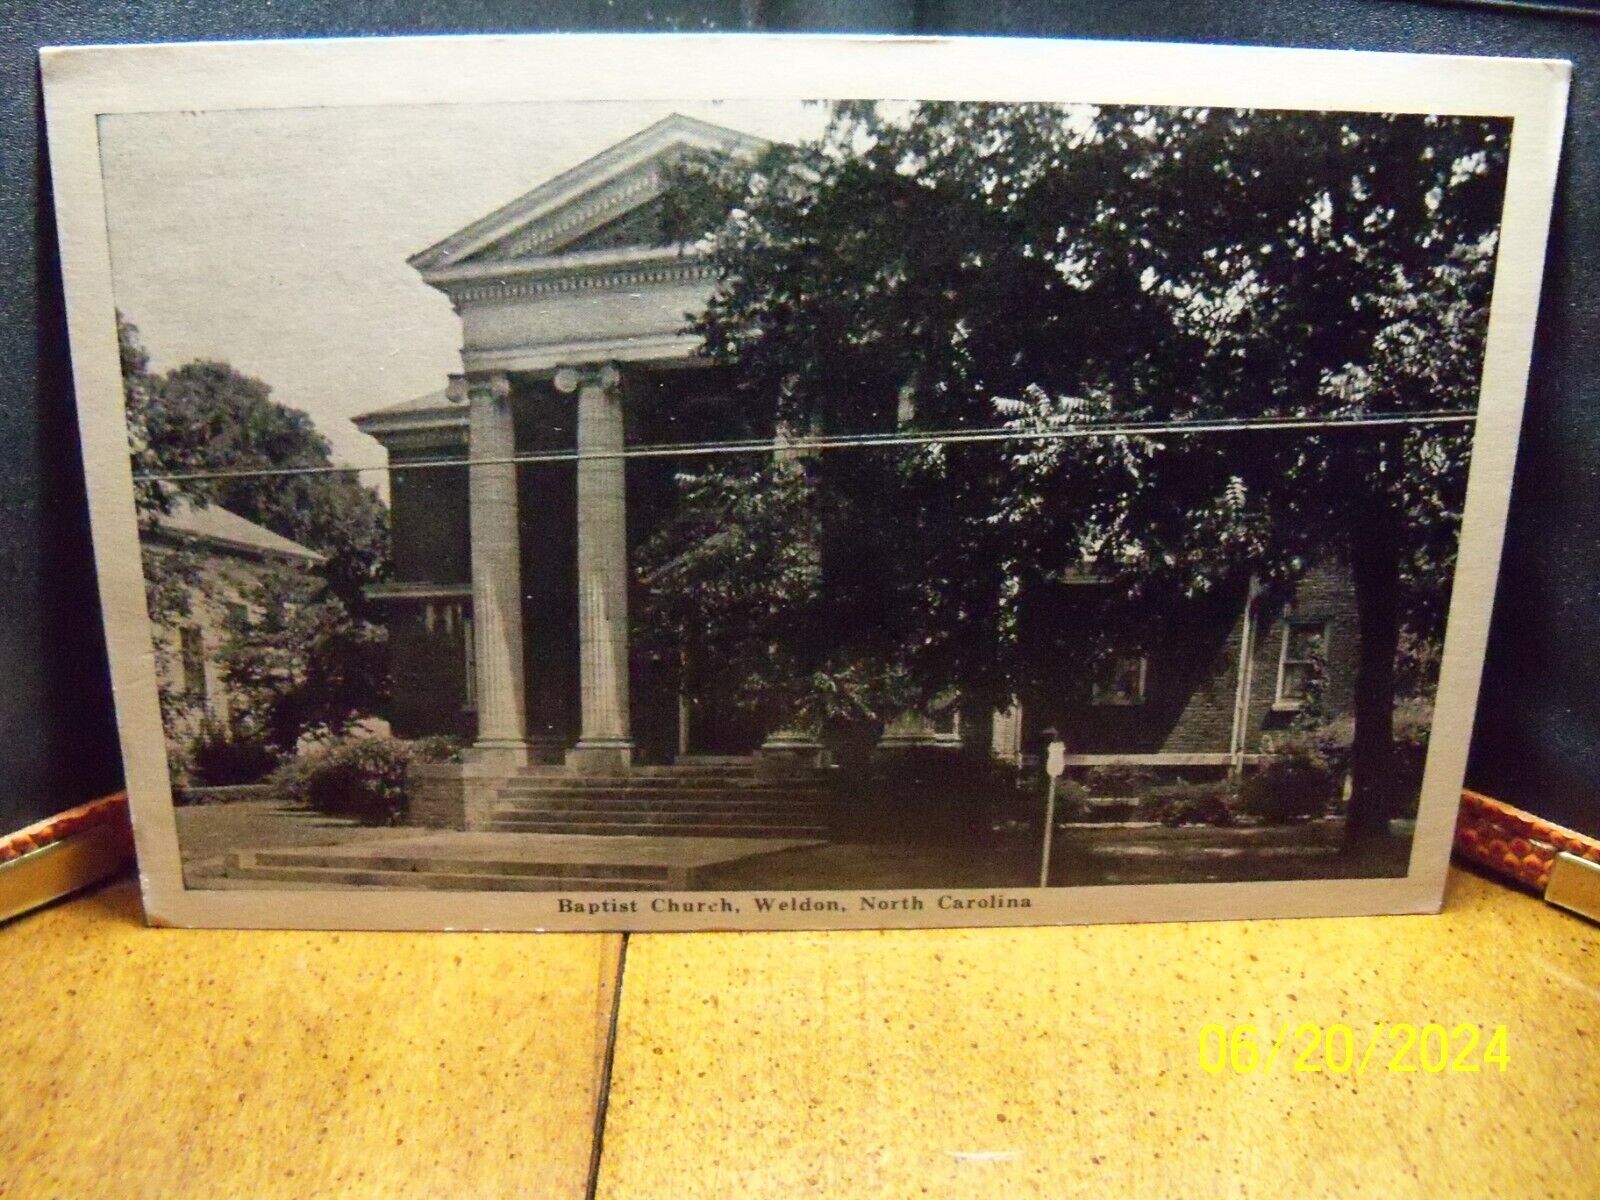 1930-40s Baptist Church massive columns large trees Weldon NC N Carolina photoca